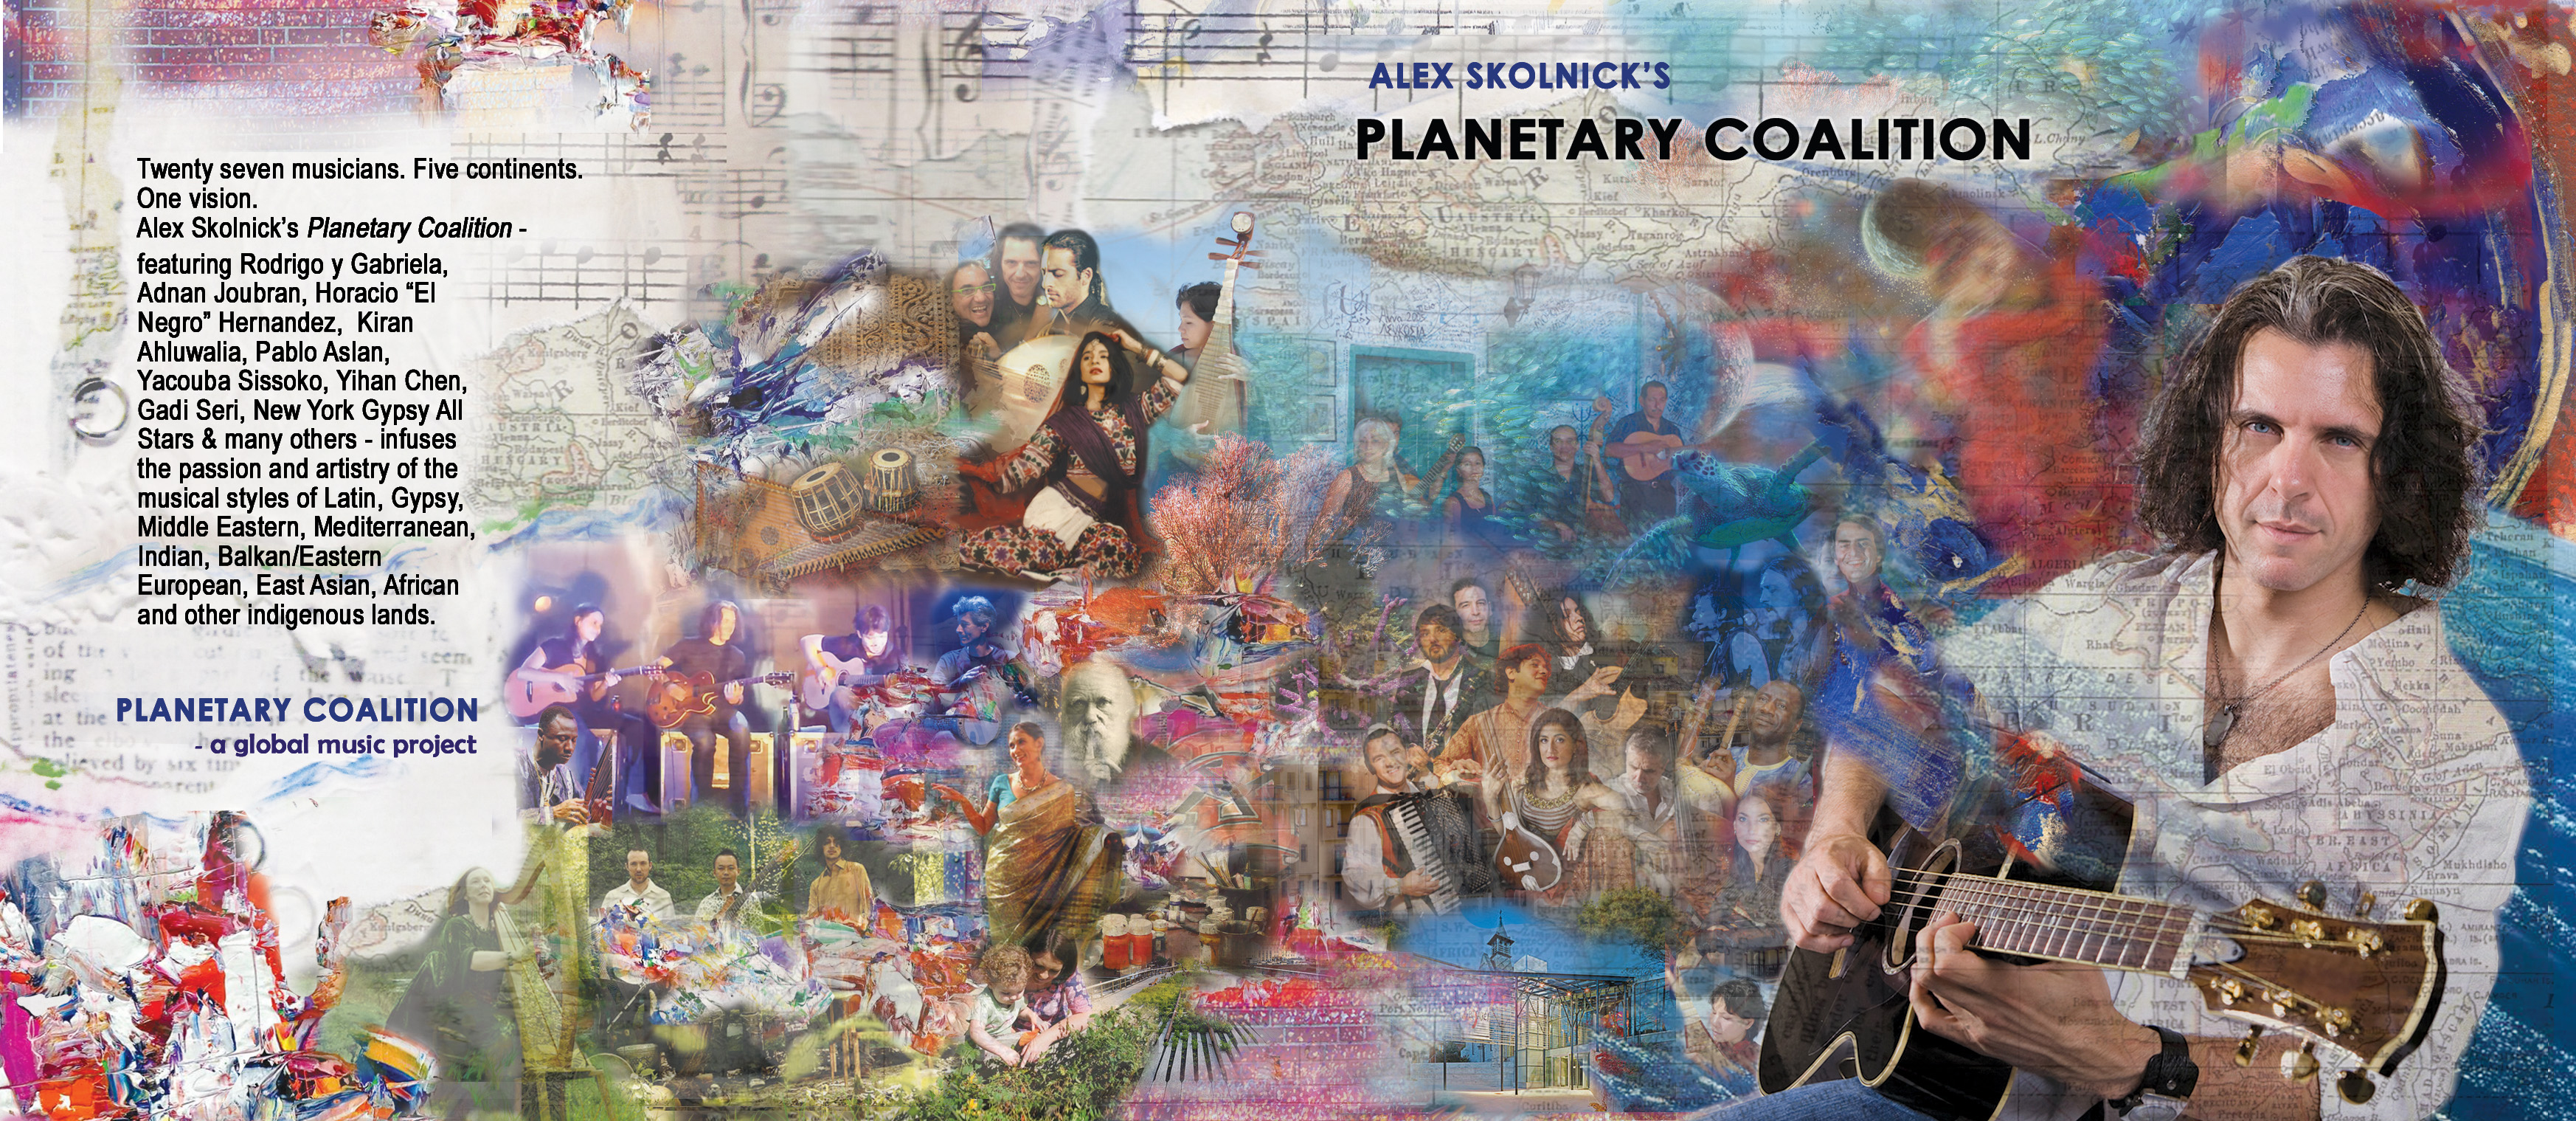 https://planetarycoalition.files.wordpress.com/2012/06/album-artwork-sneak-peak-updated2.jpg